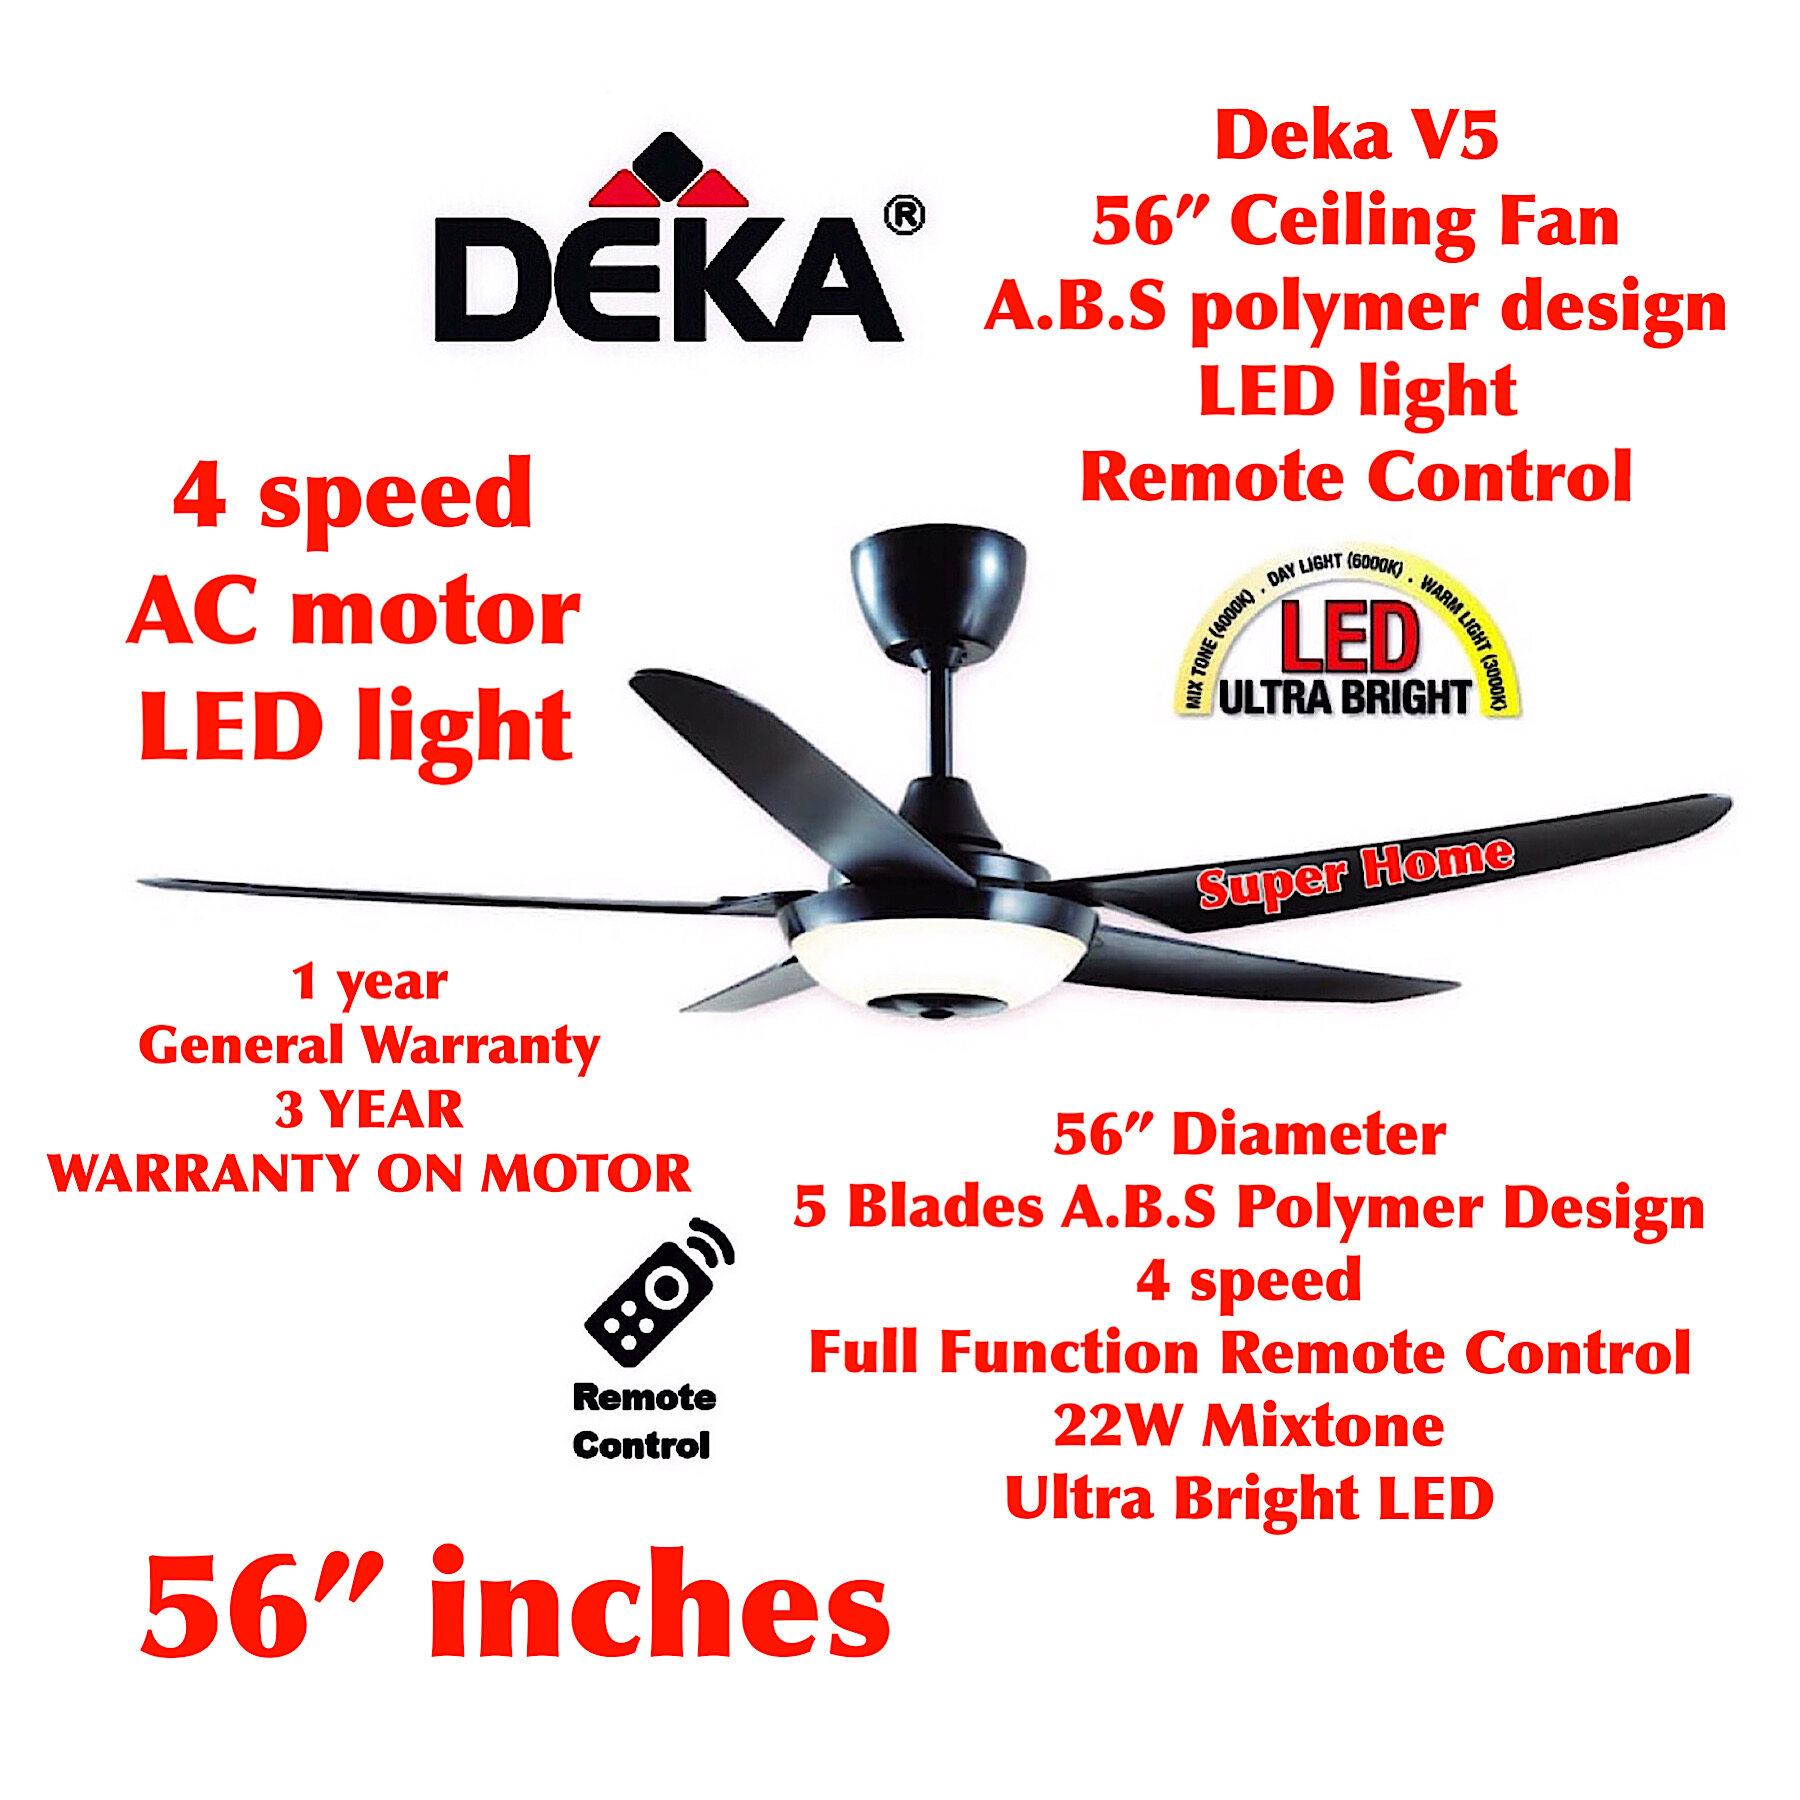 Deka D10L (Matt Black) 52 inch 5 Blades A.B.S Polymer Design Remote Control Ceiling Fan with LED Light (Ultra Bright) - 4 Speed - Black